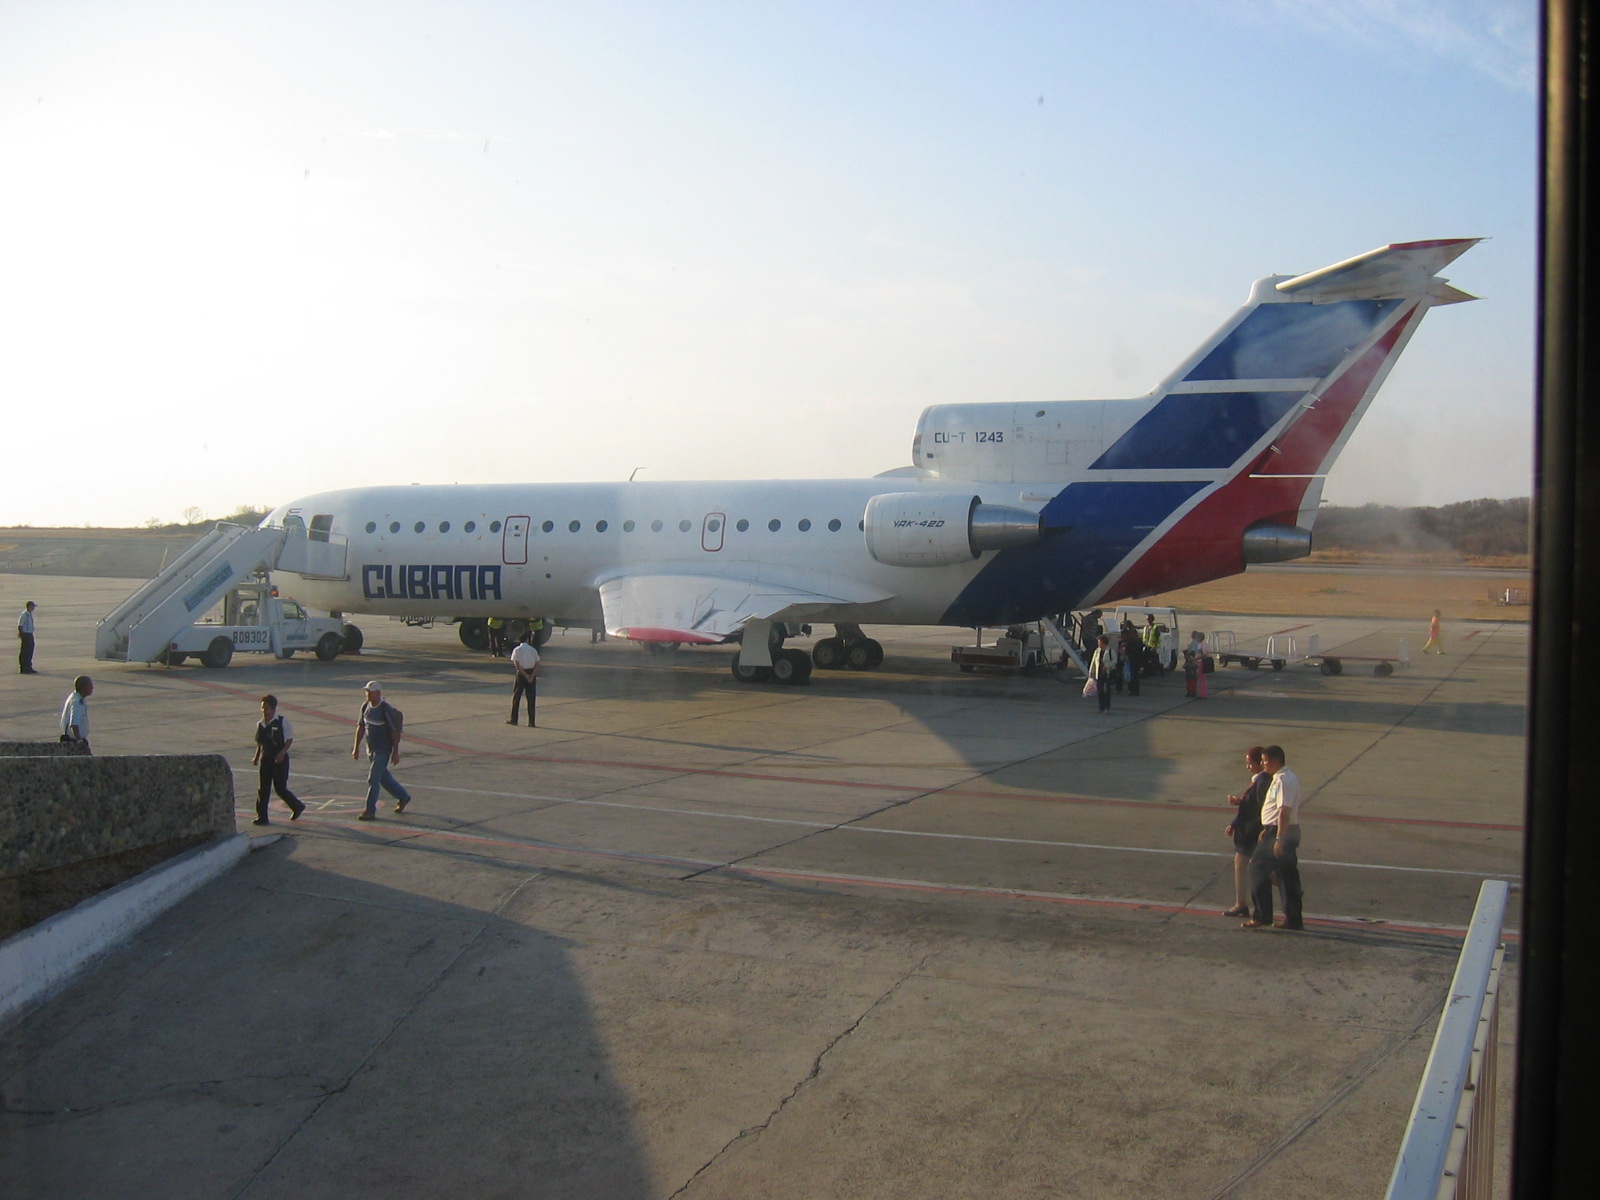 Santiago de Cuba International Airport